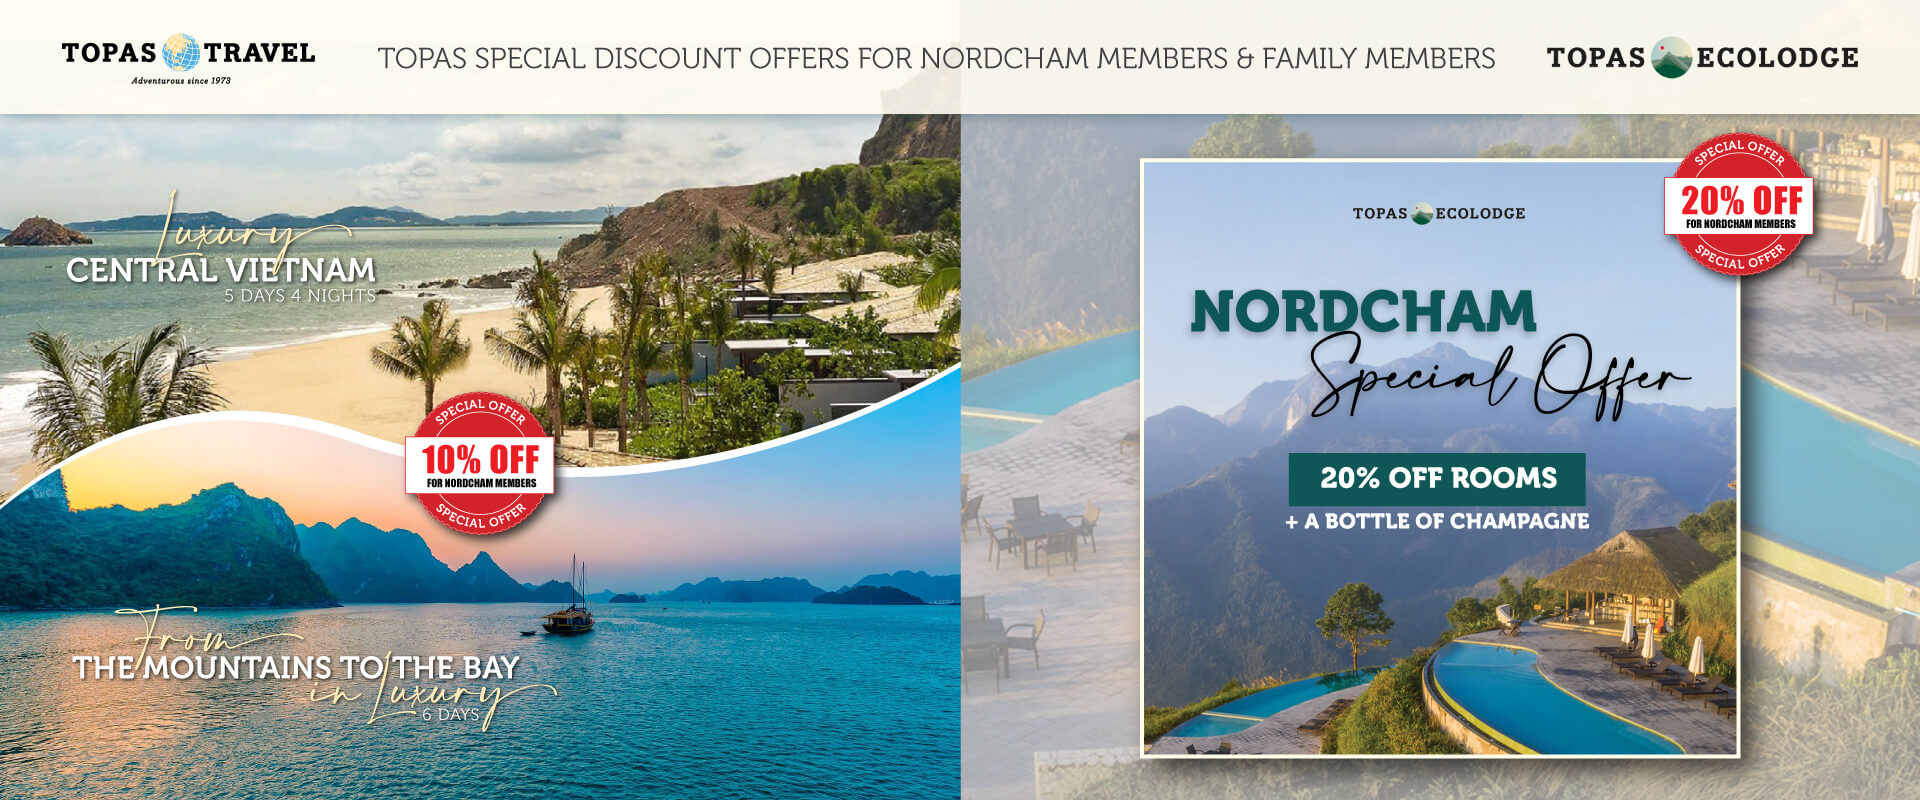 Nordcharm homepage